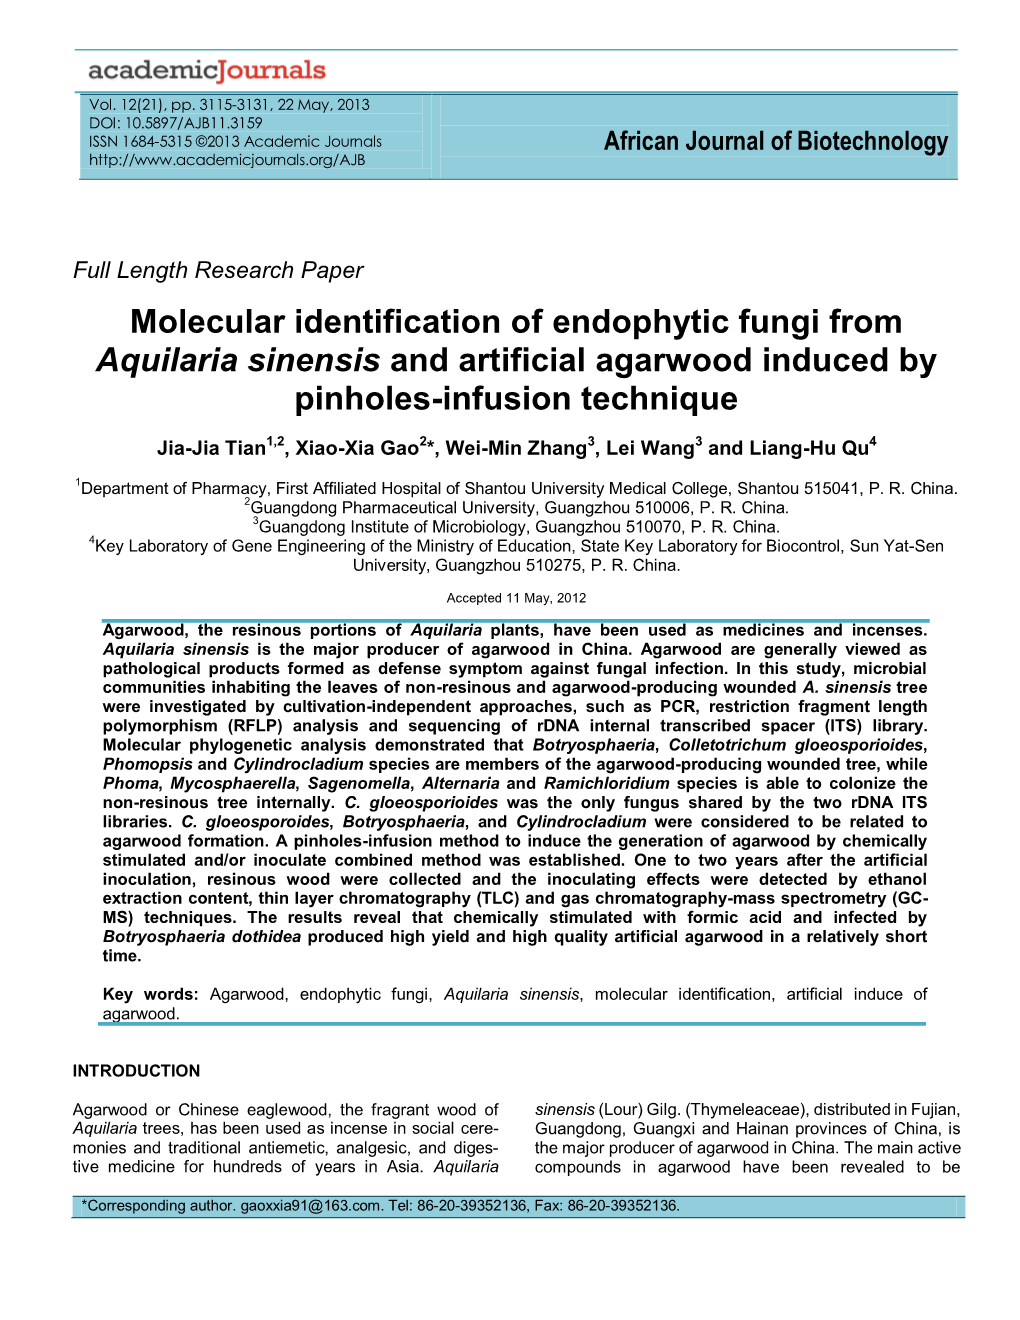 Molecular Identification of Endophytic Fungi from Aquilaria Sinensis ...